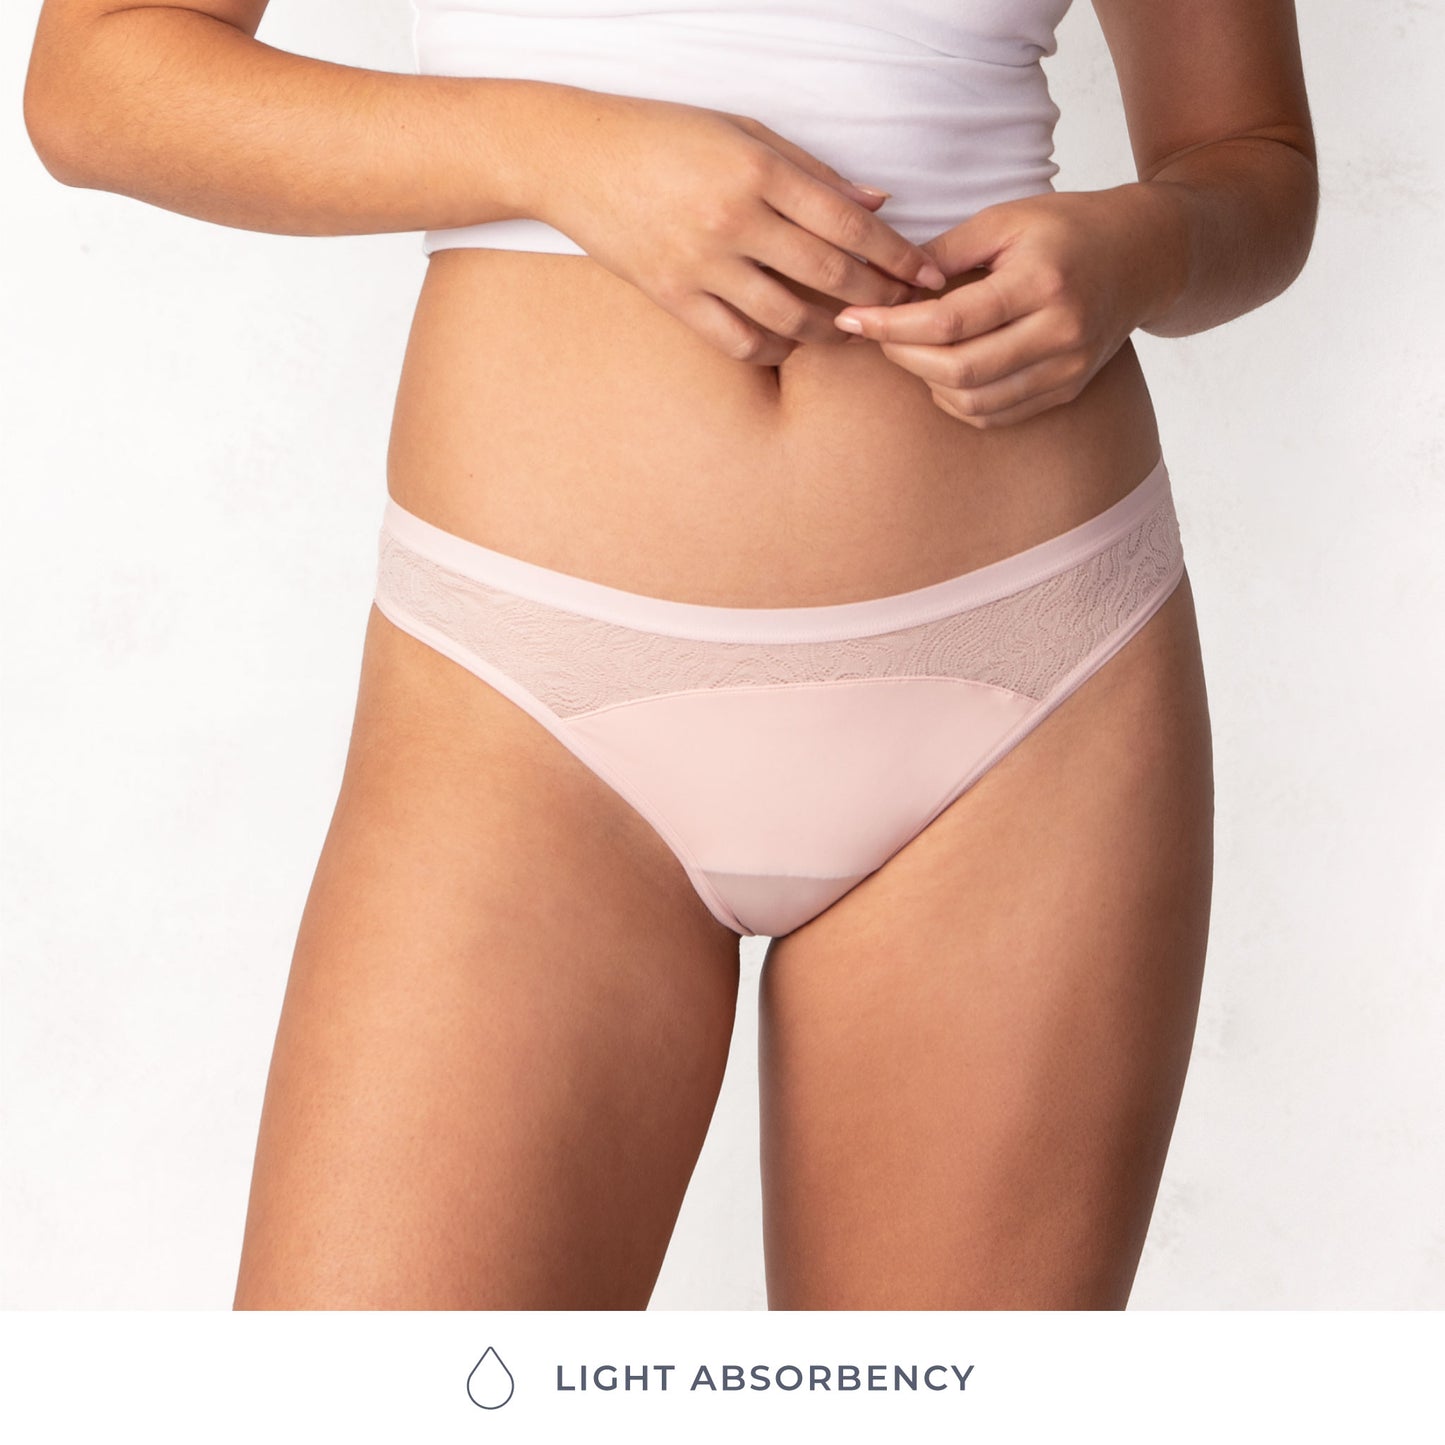 Period Underwear for Women High Waist Leak-Proof Postpartum Menstrual Panties  Ladies Protective Briefs - 4 Pack(2XL,4 Color) 